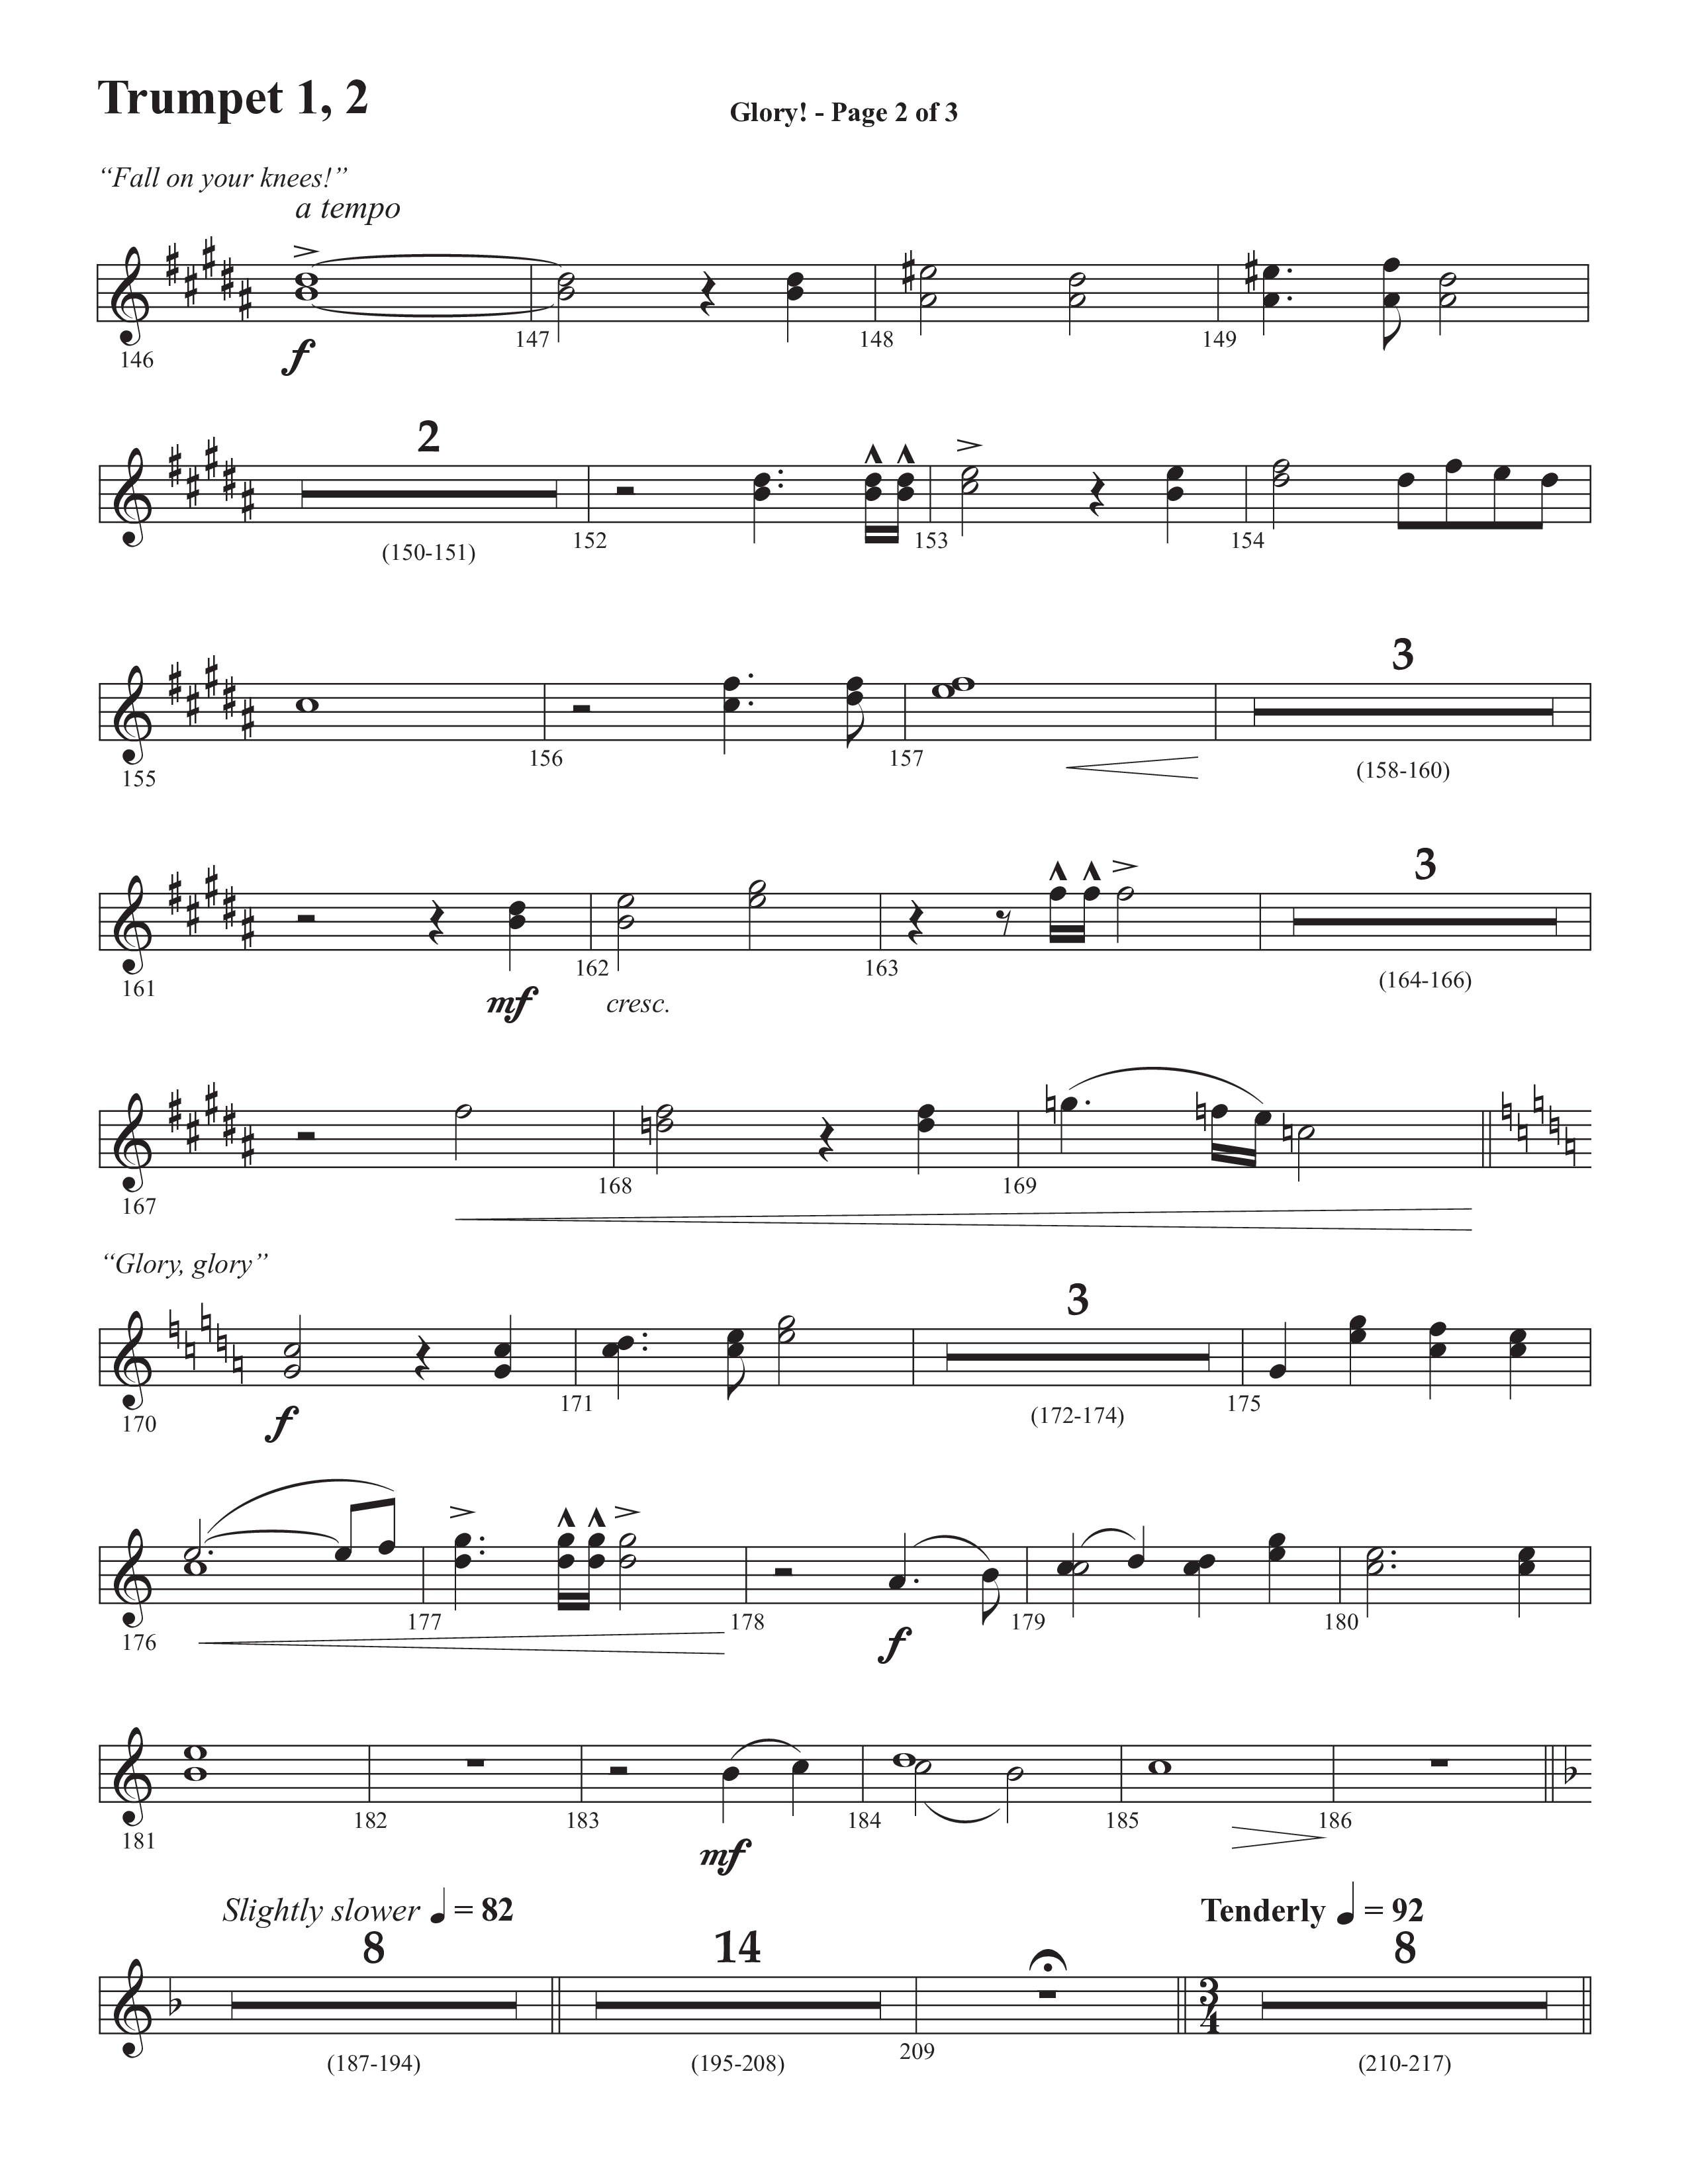 Glory: A Christmas Worship Experience (Choral Anthem SATB) Trumpet 1,2 (Semsen Music / Arr. John Bolin / Orch. Cliff Duren)